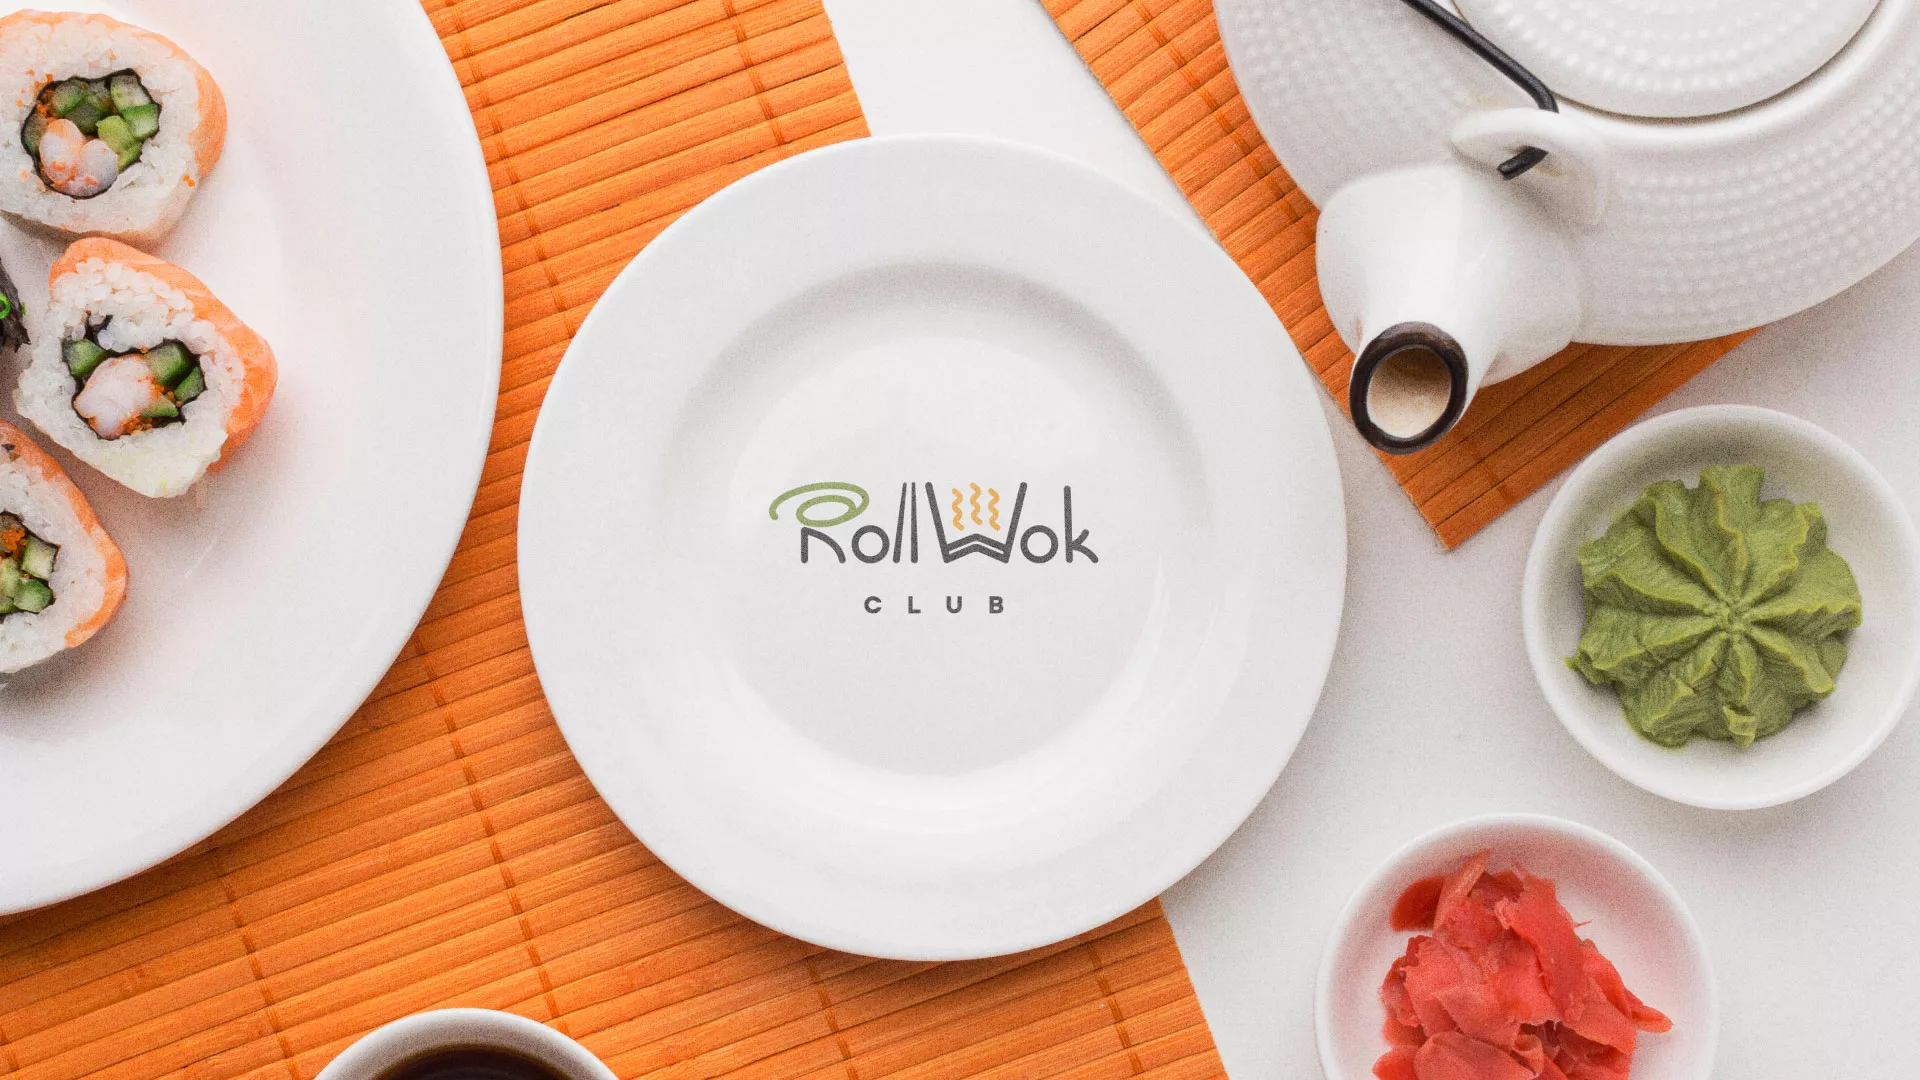 Разработка логотипа и фирменного стиля суши-бара «Roll Wok Club» в Пудоже